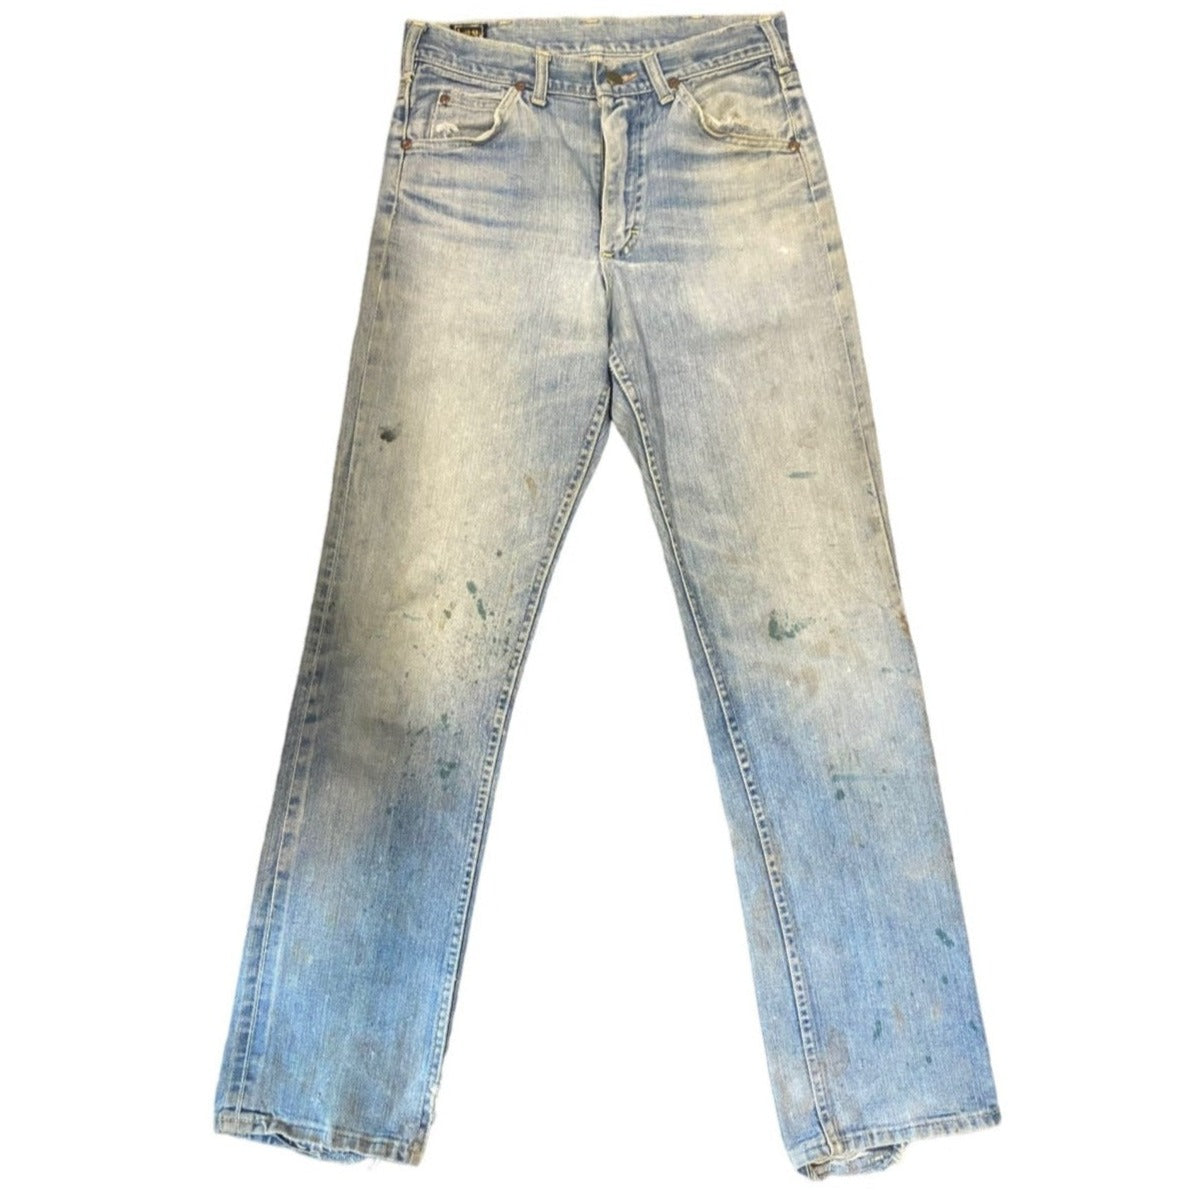 Buy Lee White Mid Rise Jeans for Men Online @ Tata CLiQ